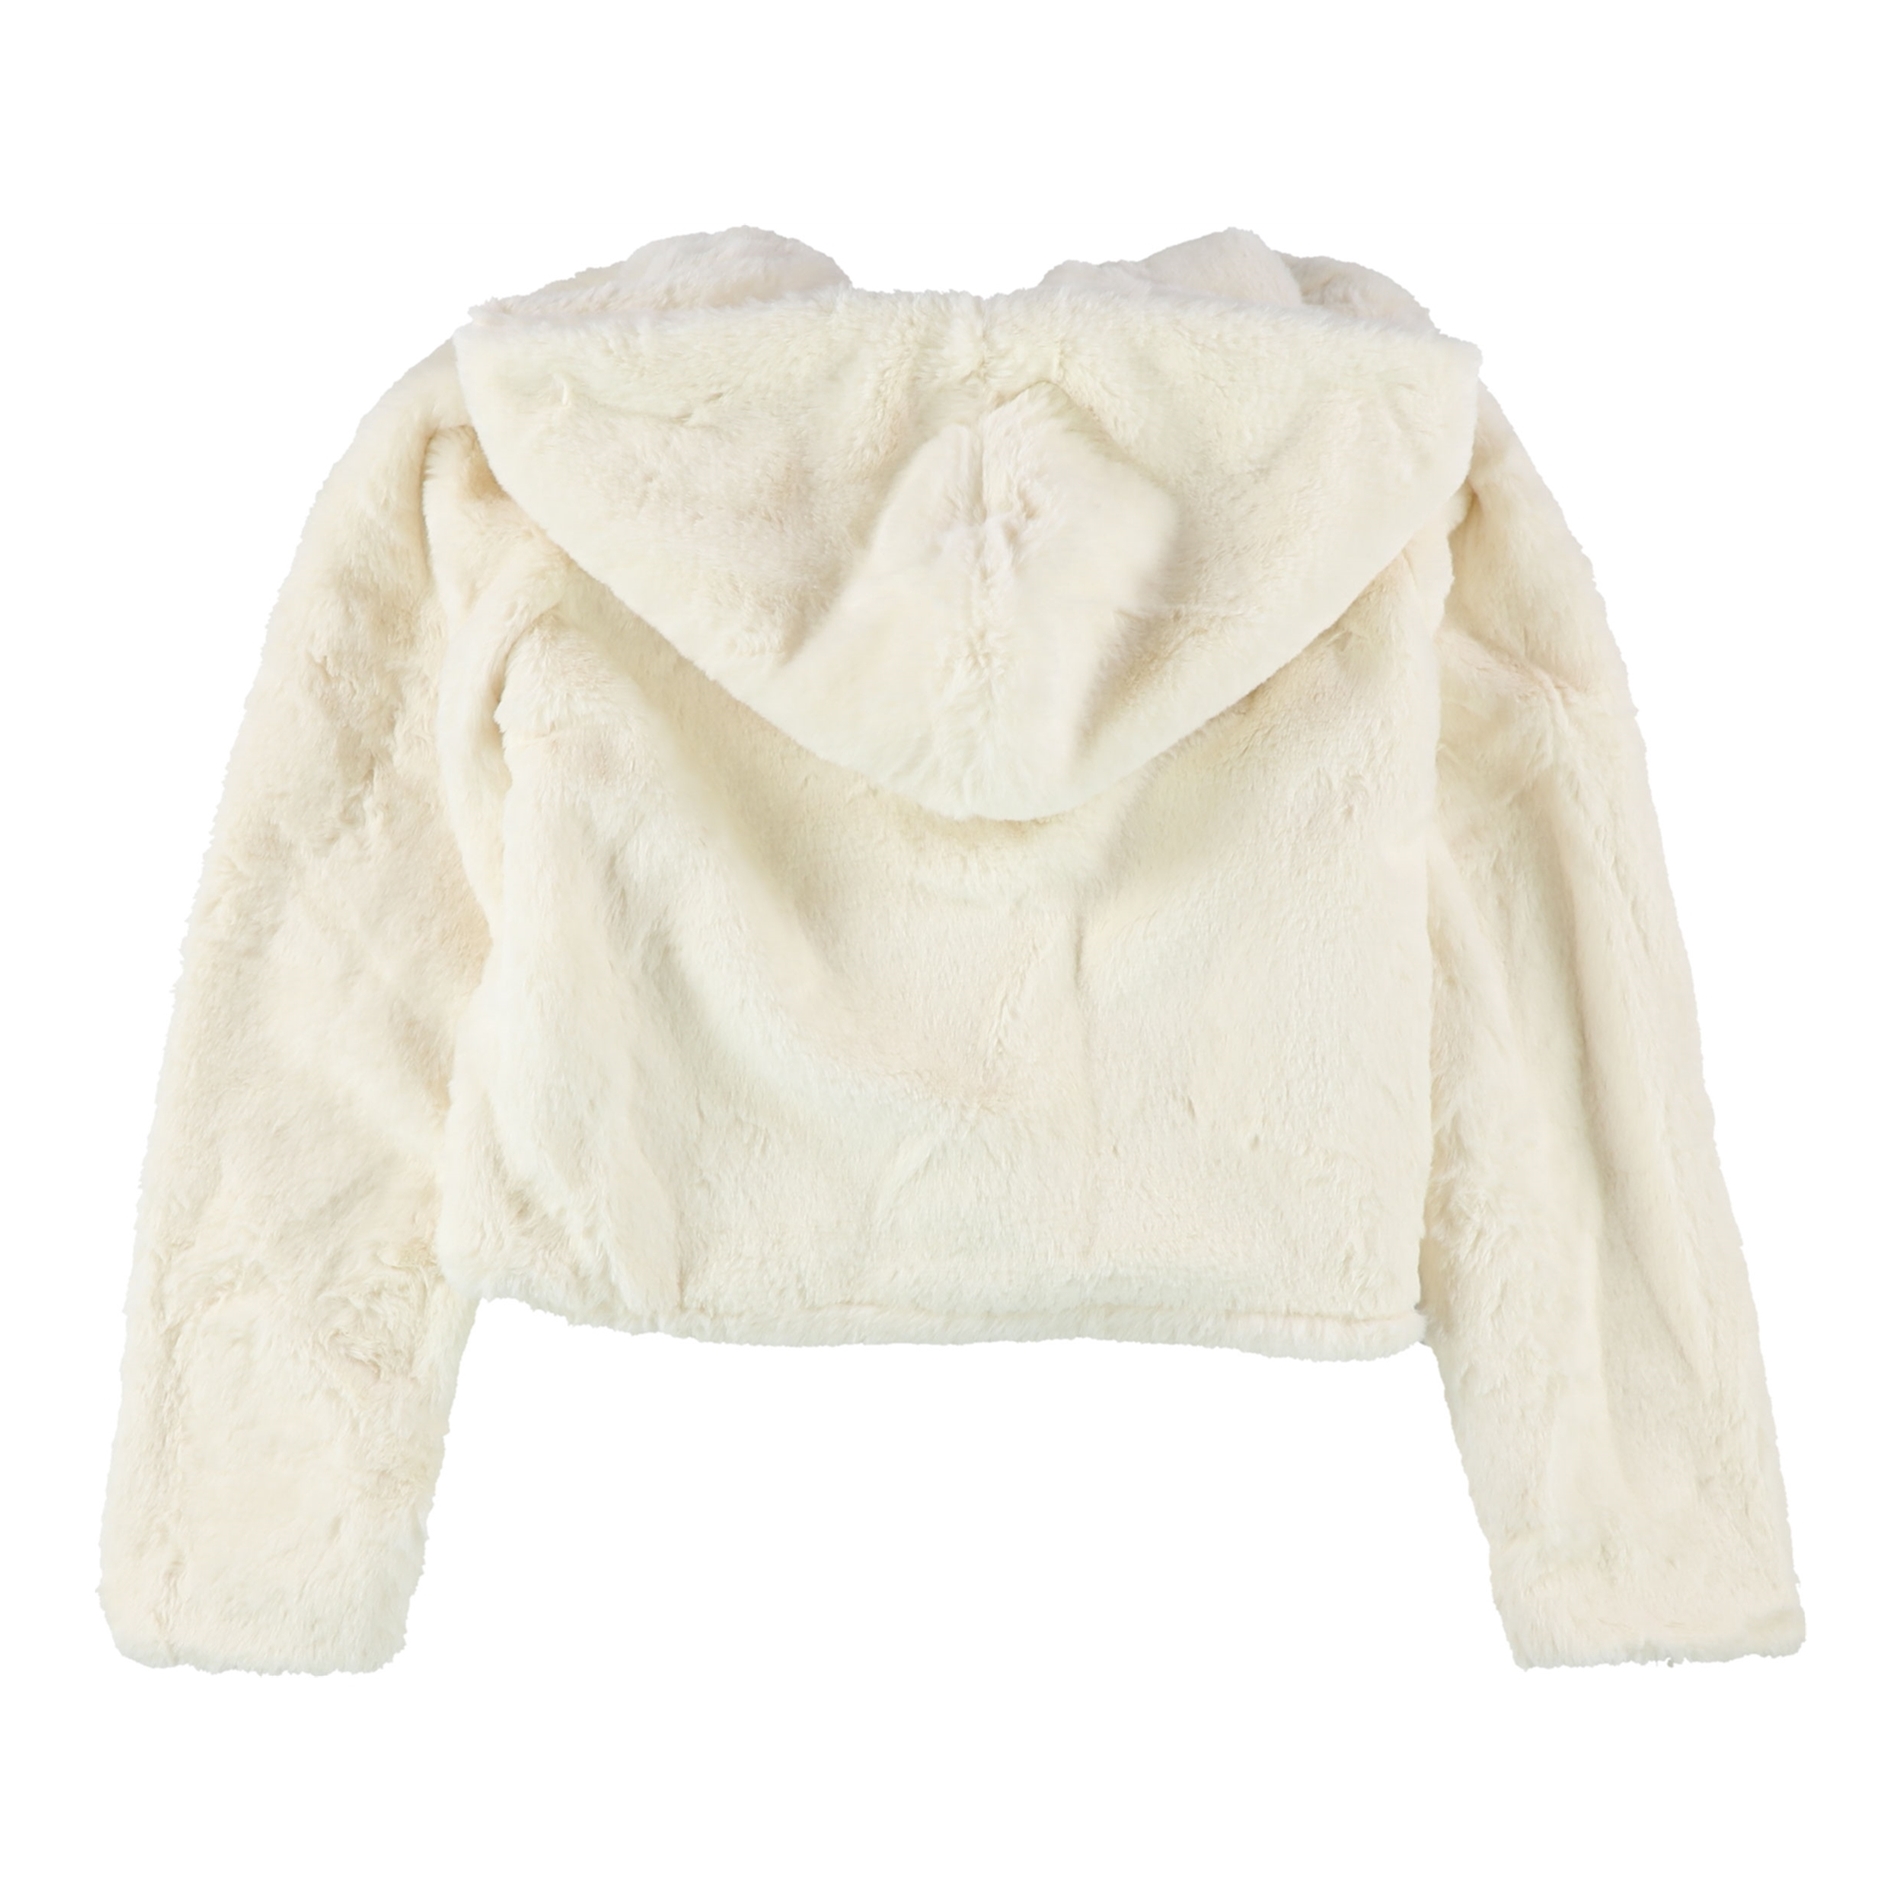 Aeropostale All Weather Coat- White | Coats for women, Clothes design,  Stylish women